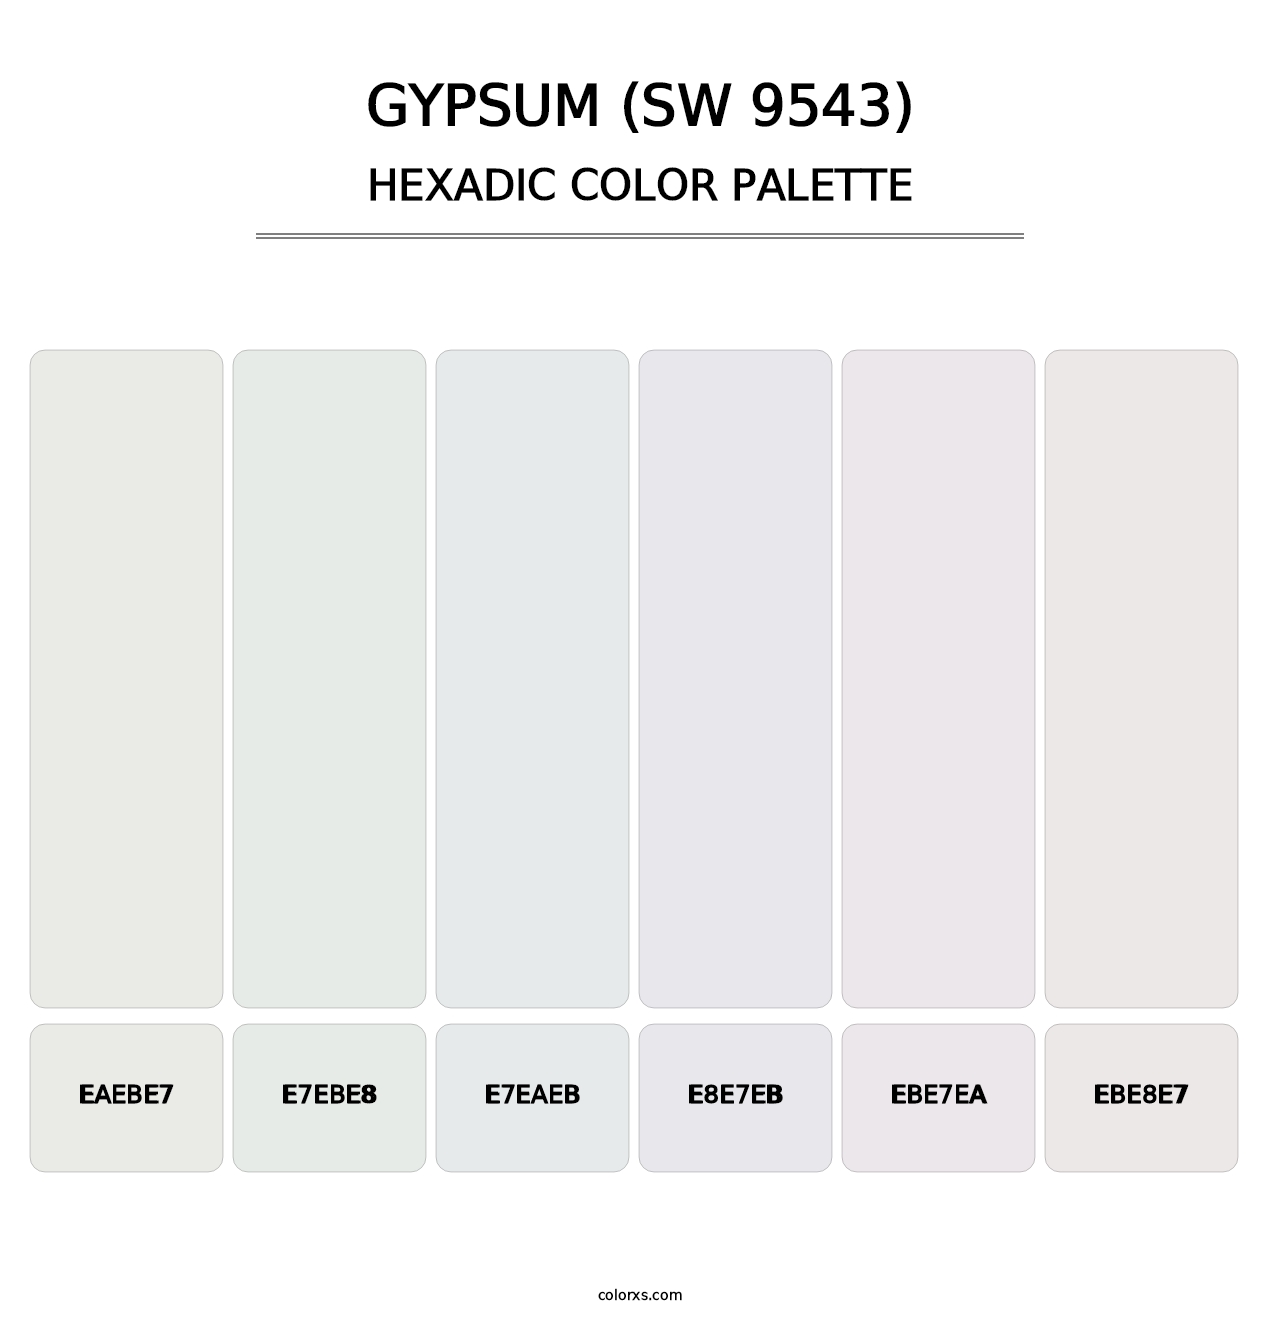 Gypsum (SW 9543) - Hexadic Color Palette